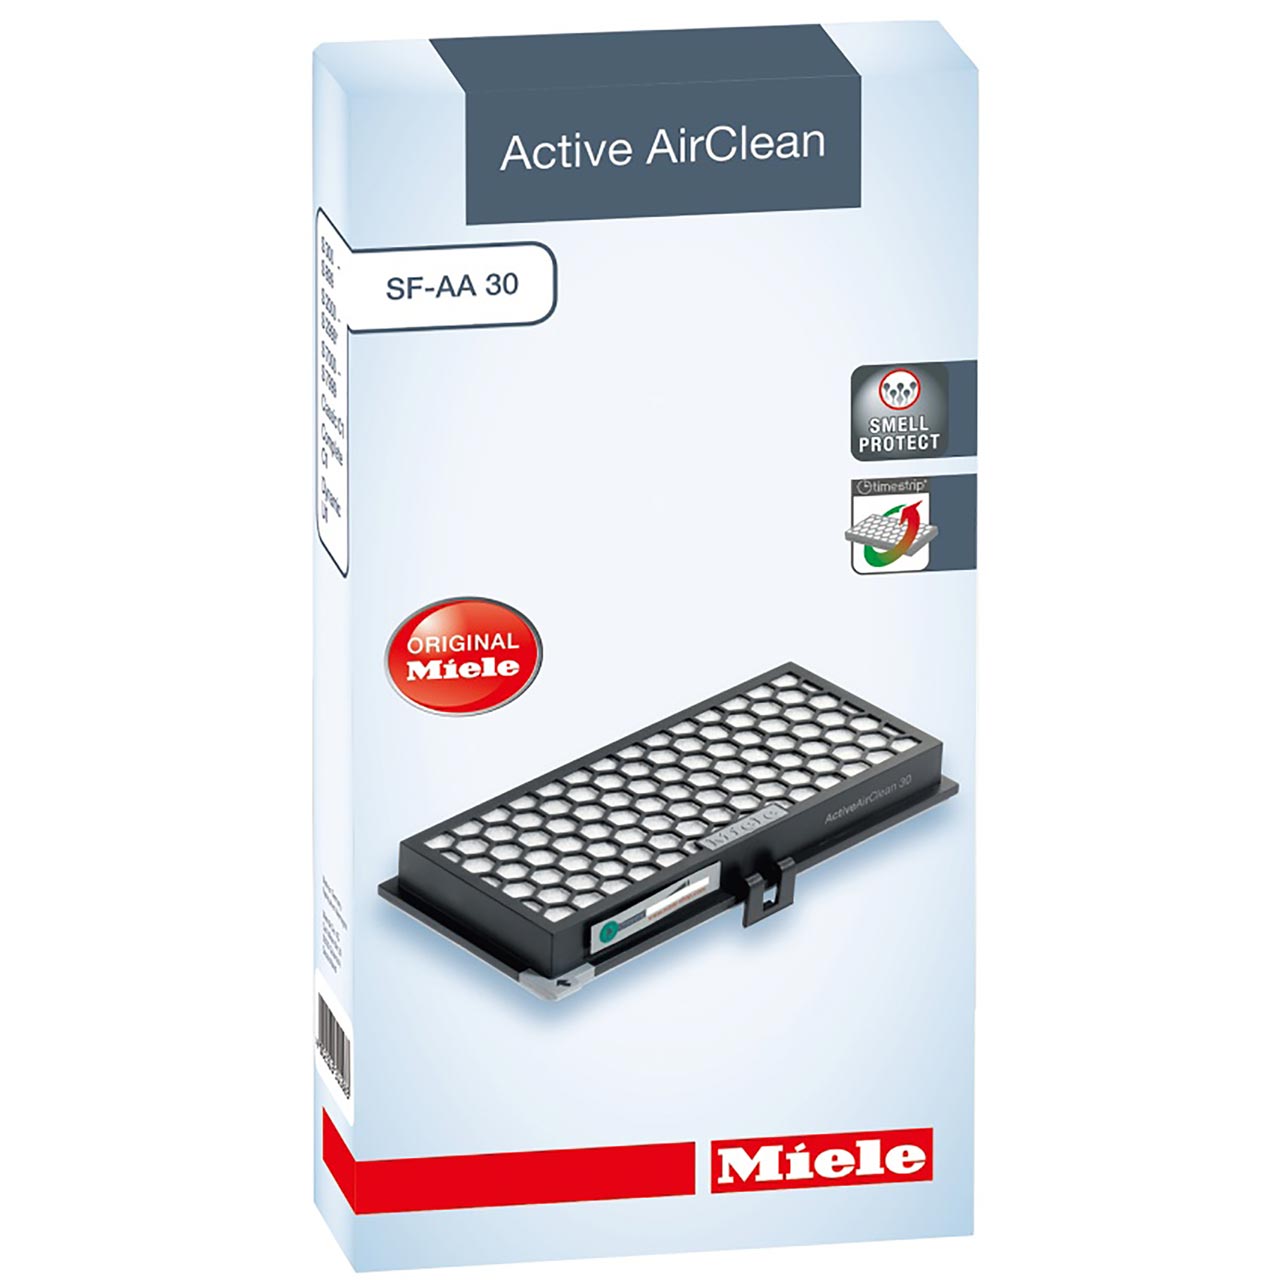 Miele Active AirClean Filter SF AA 30 Review